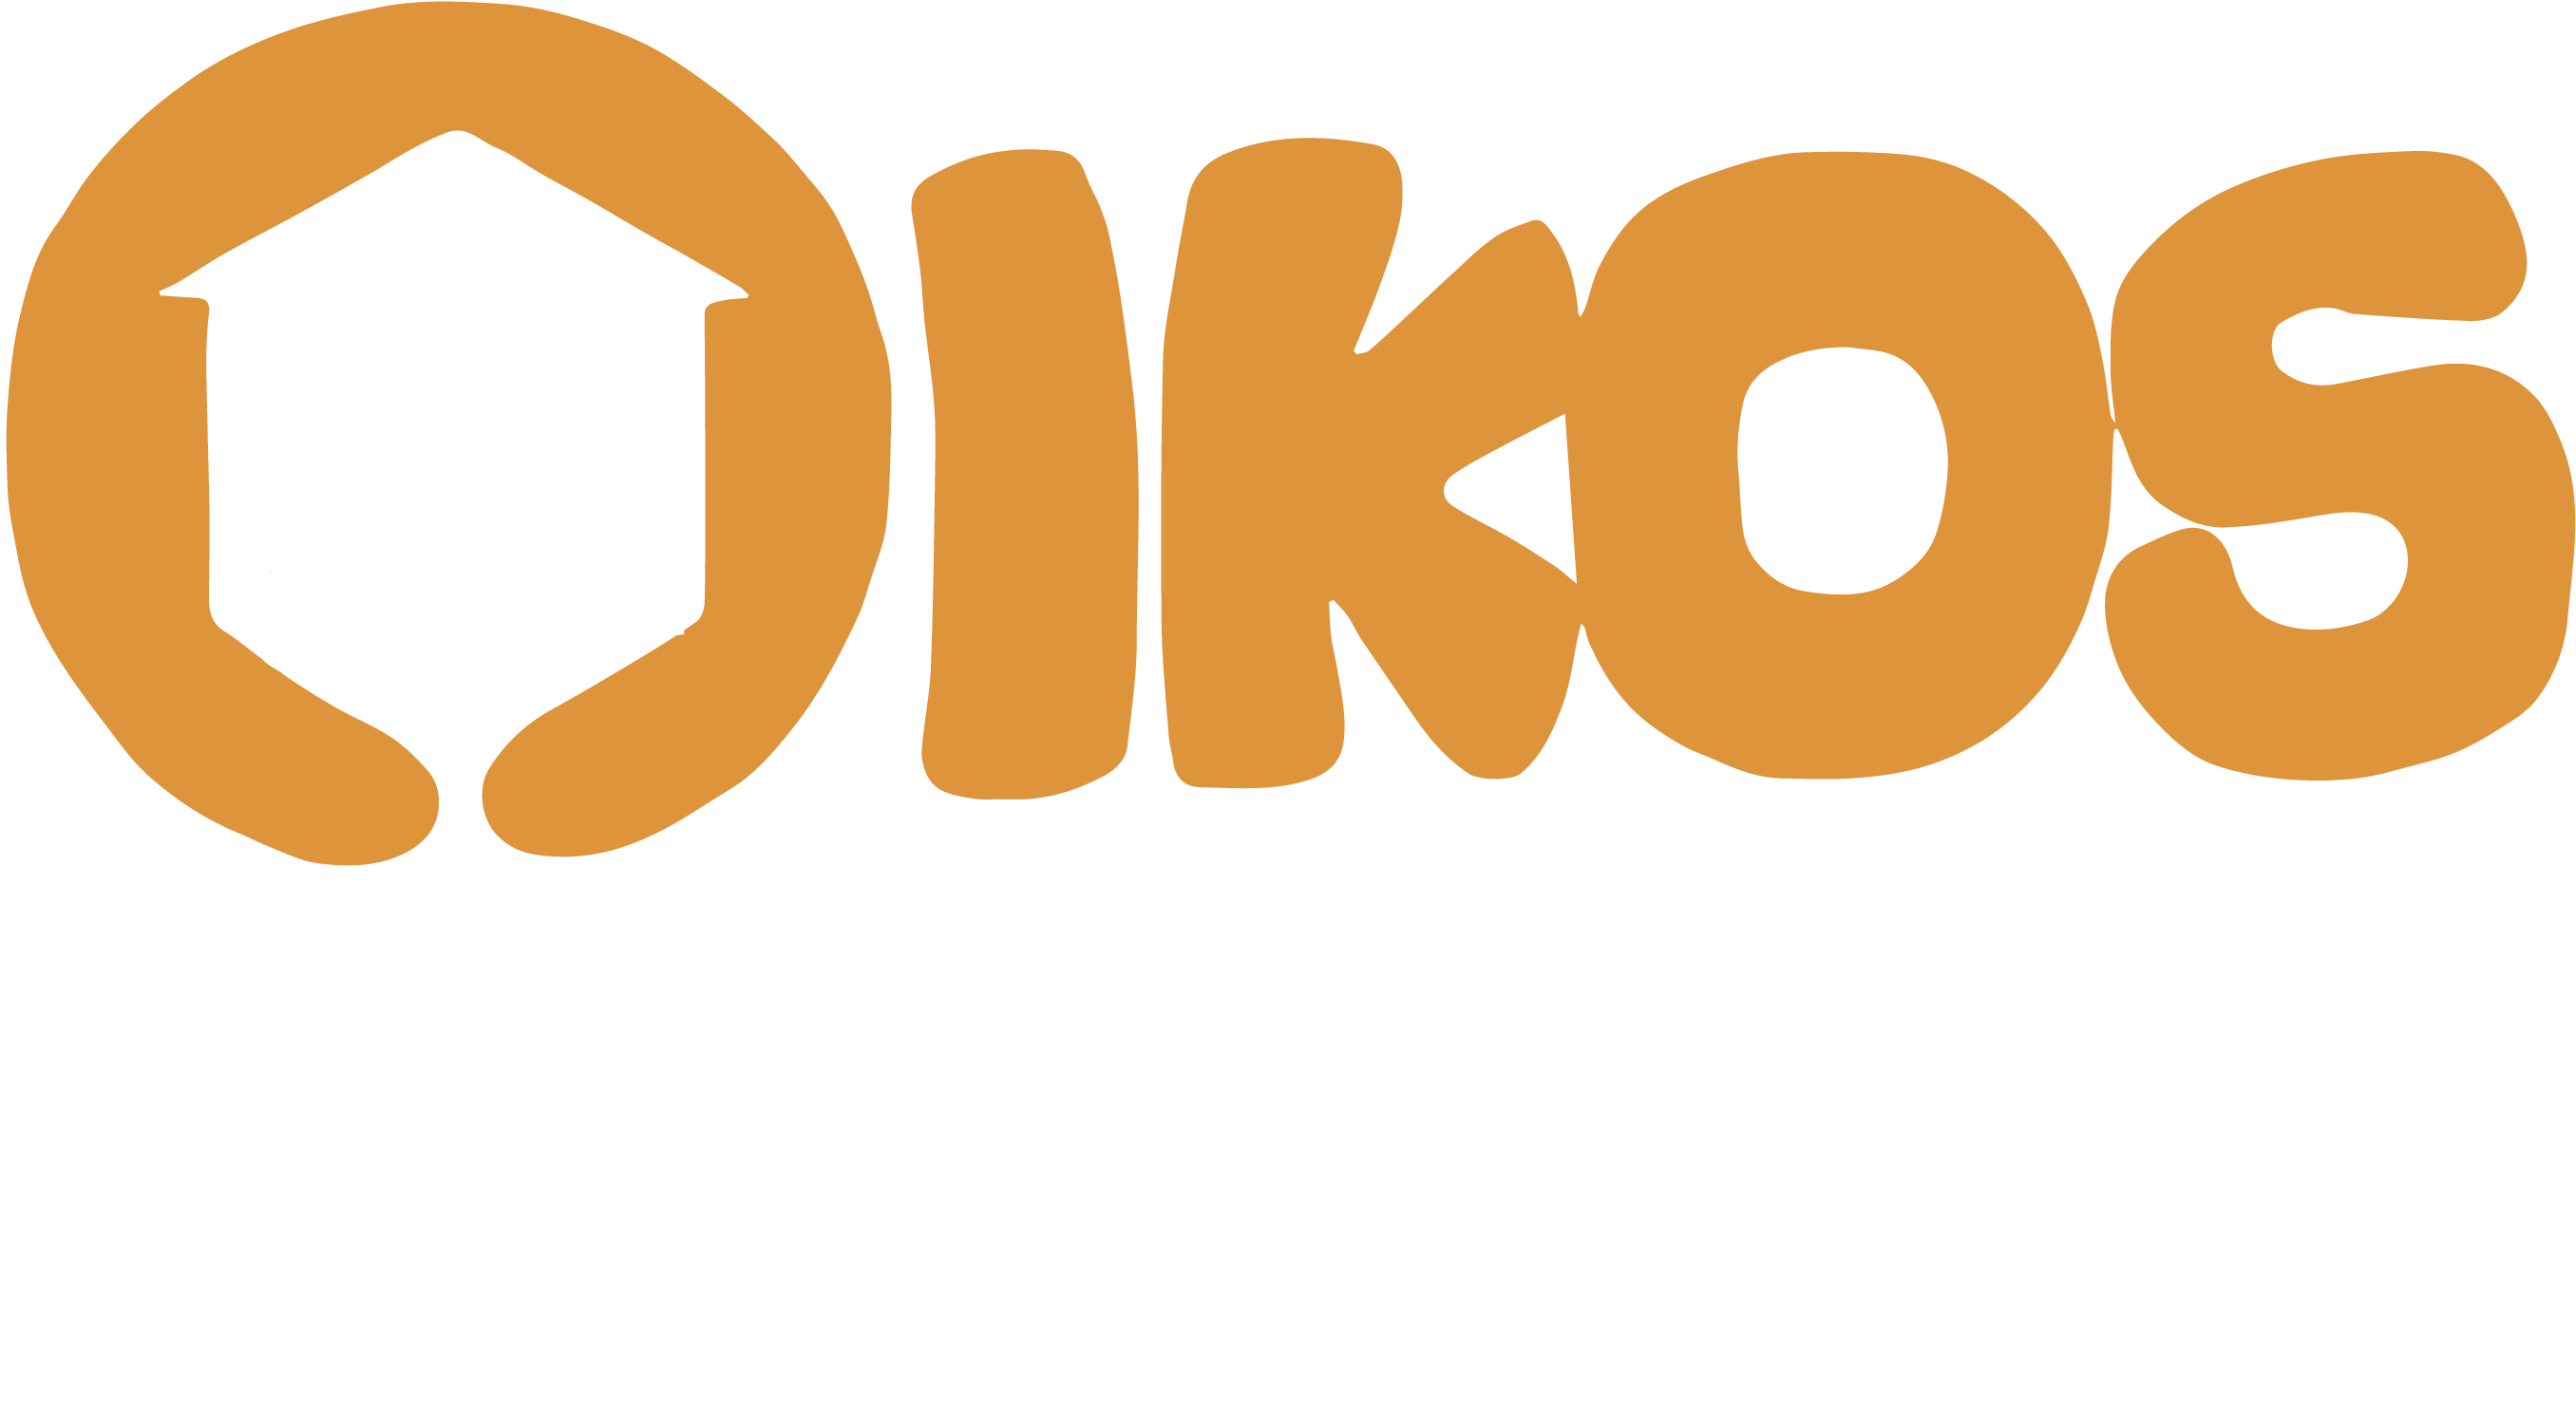 Oikos Household Of Faith - Oikos (3136x1692)